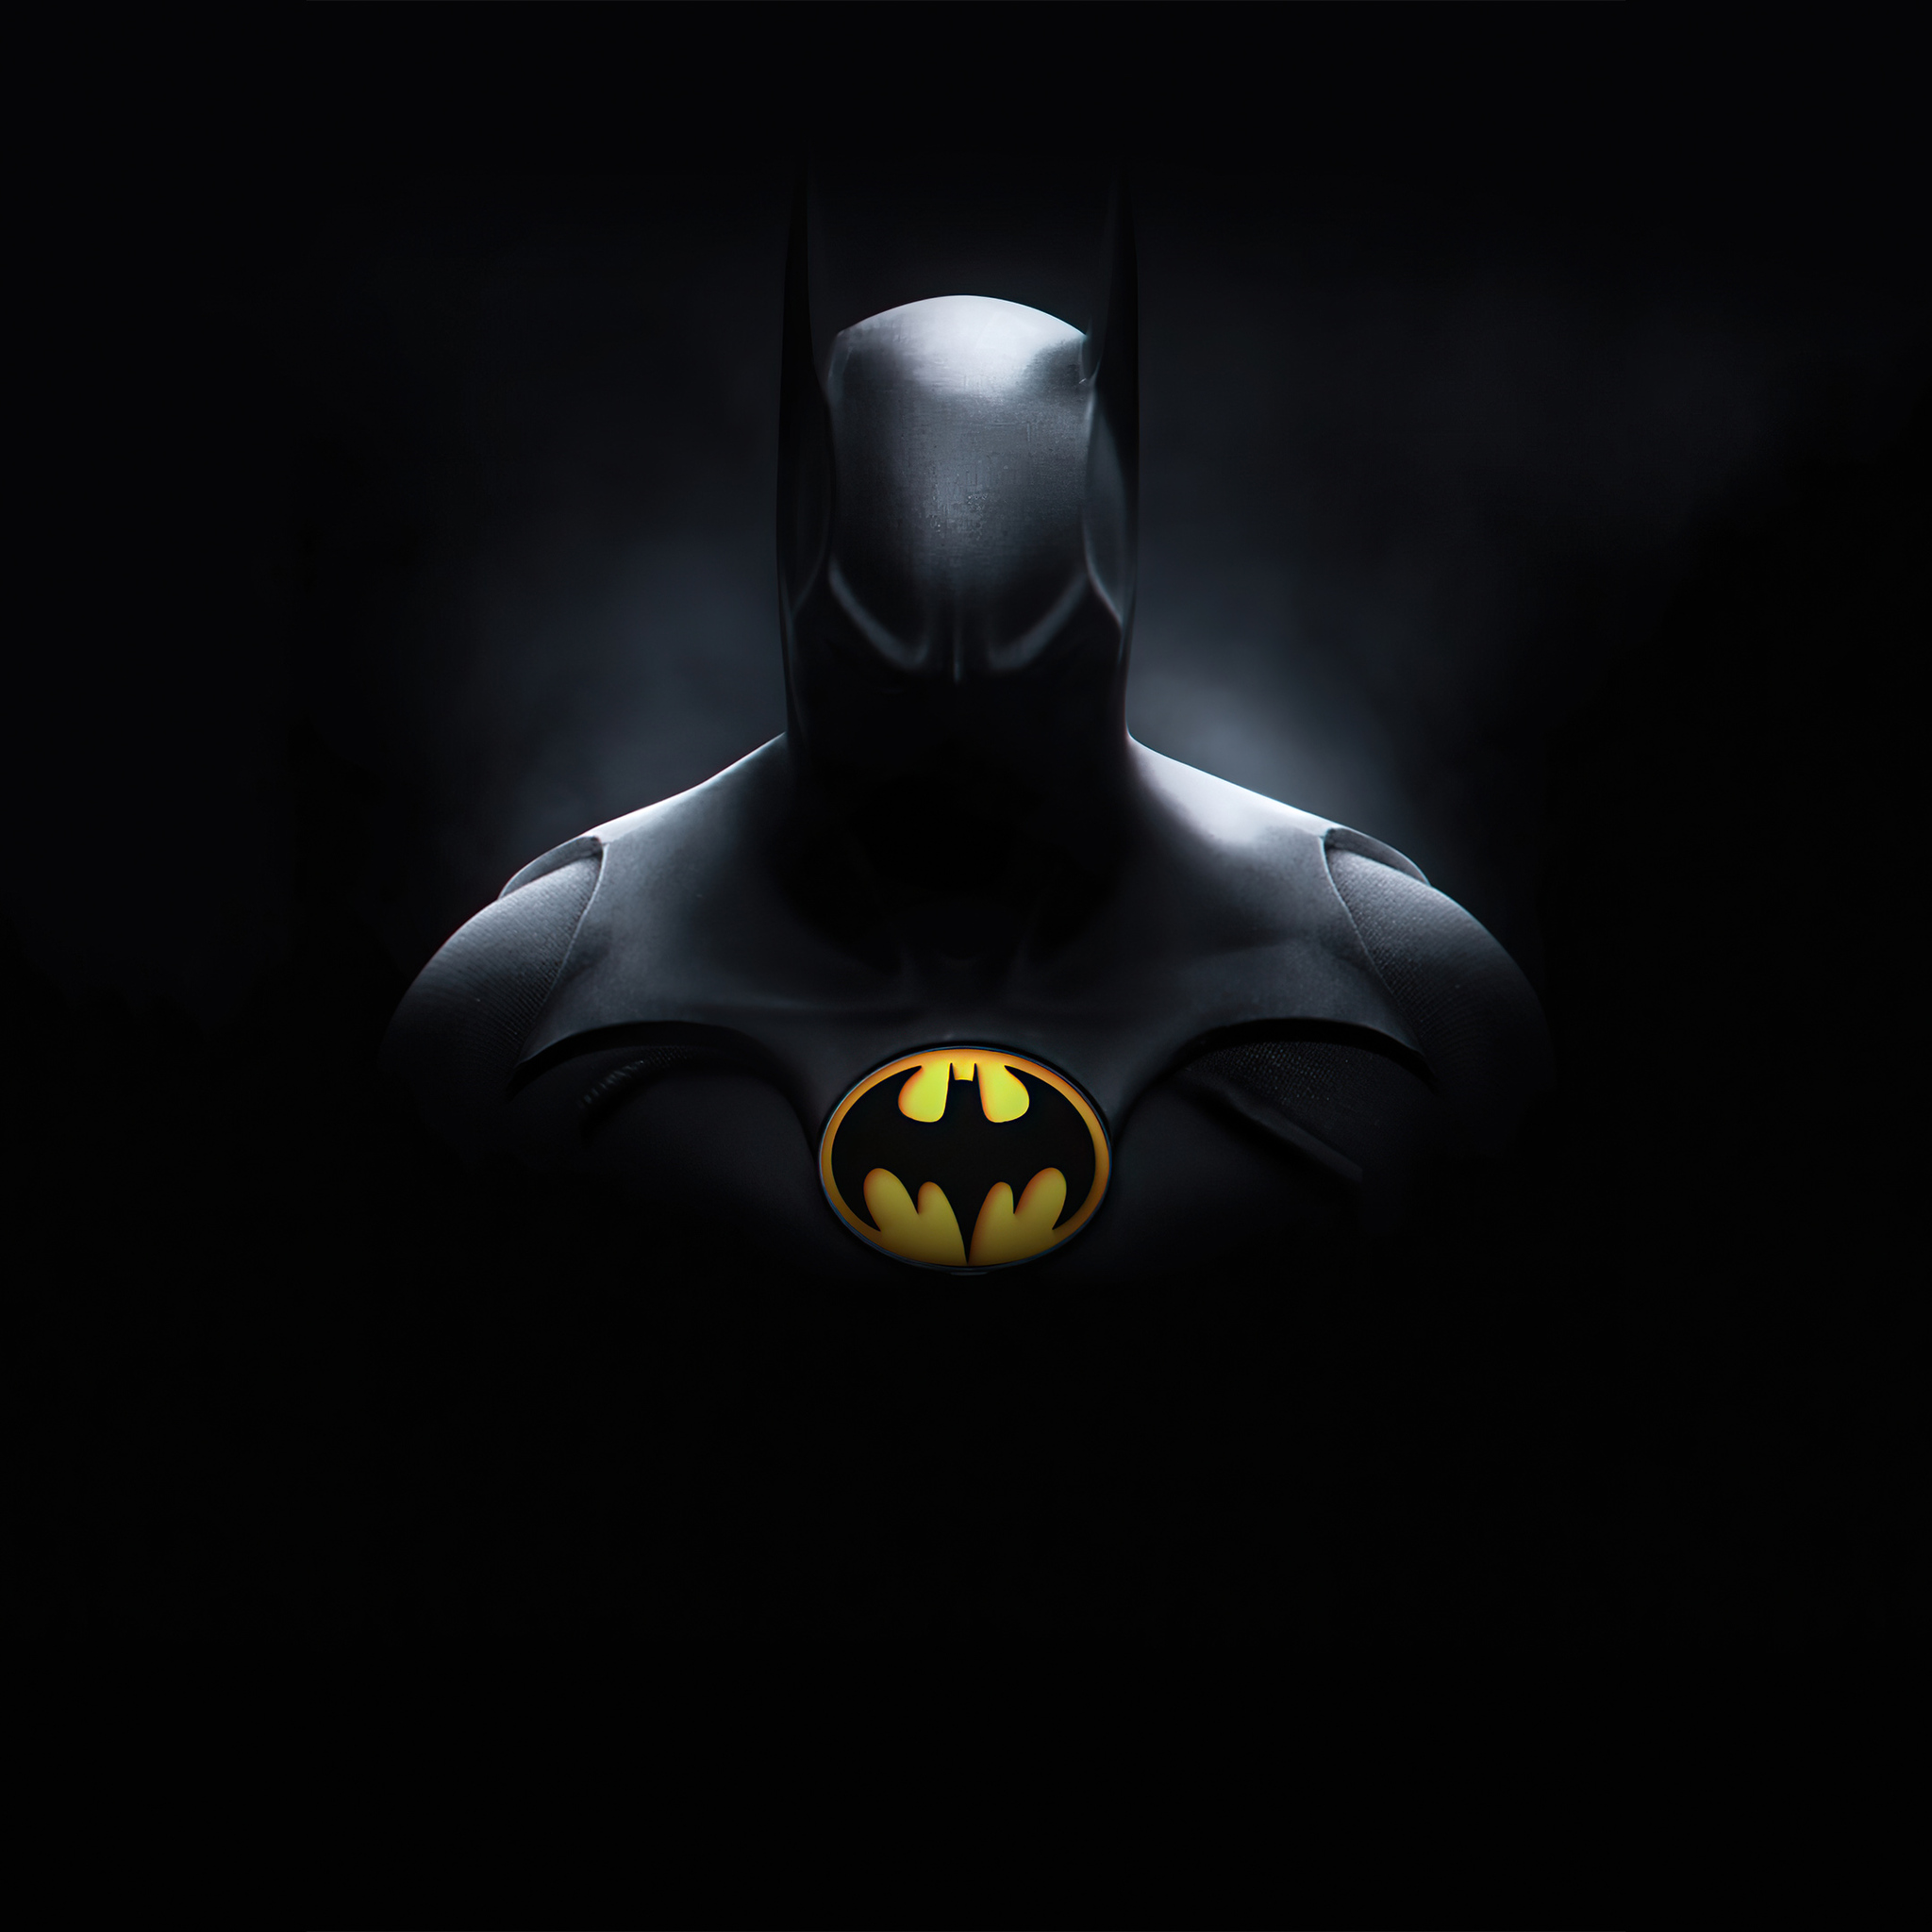 4k Batman Michael Keaton iPad Air HD 4k Wallpaper, Image, Background, Photo and Picture